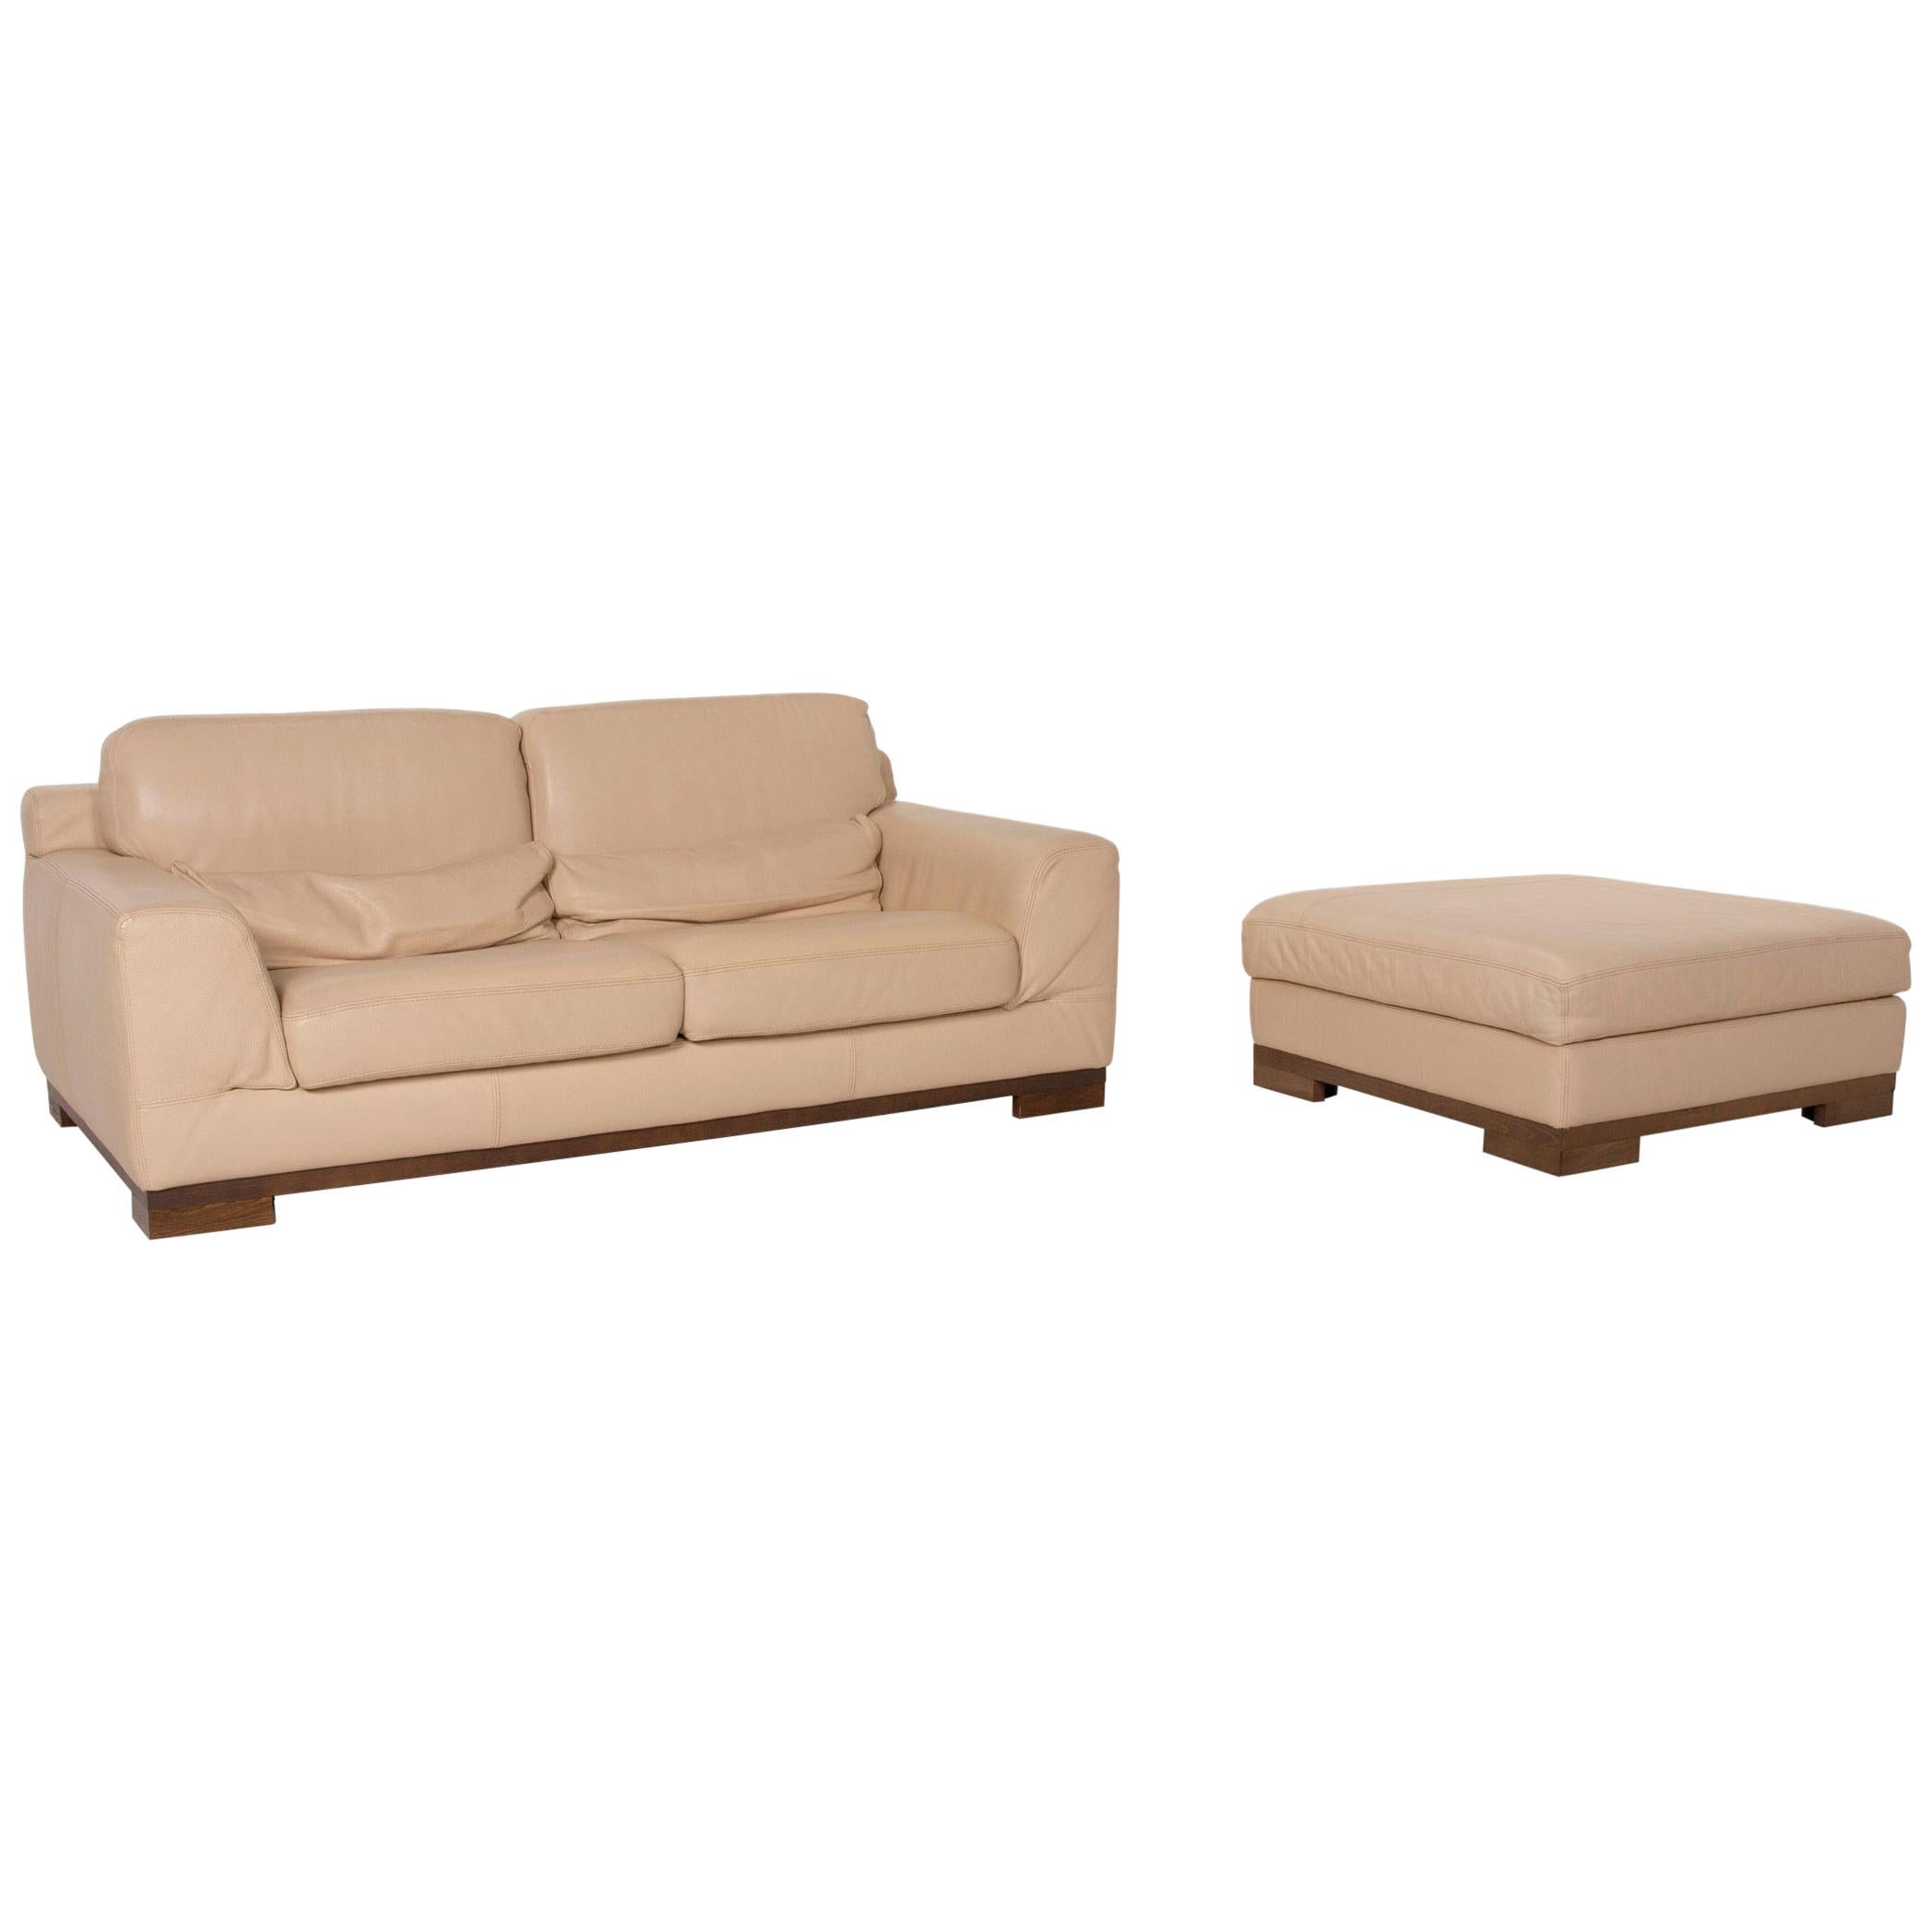 Natuzzi 2085 Leather Sofa Set Beige Two-Seat Ottoman For Sale